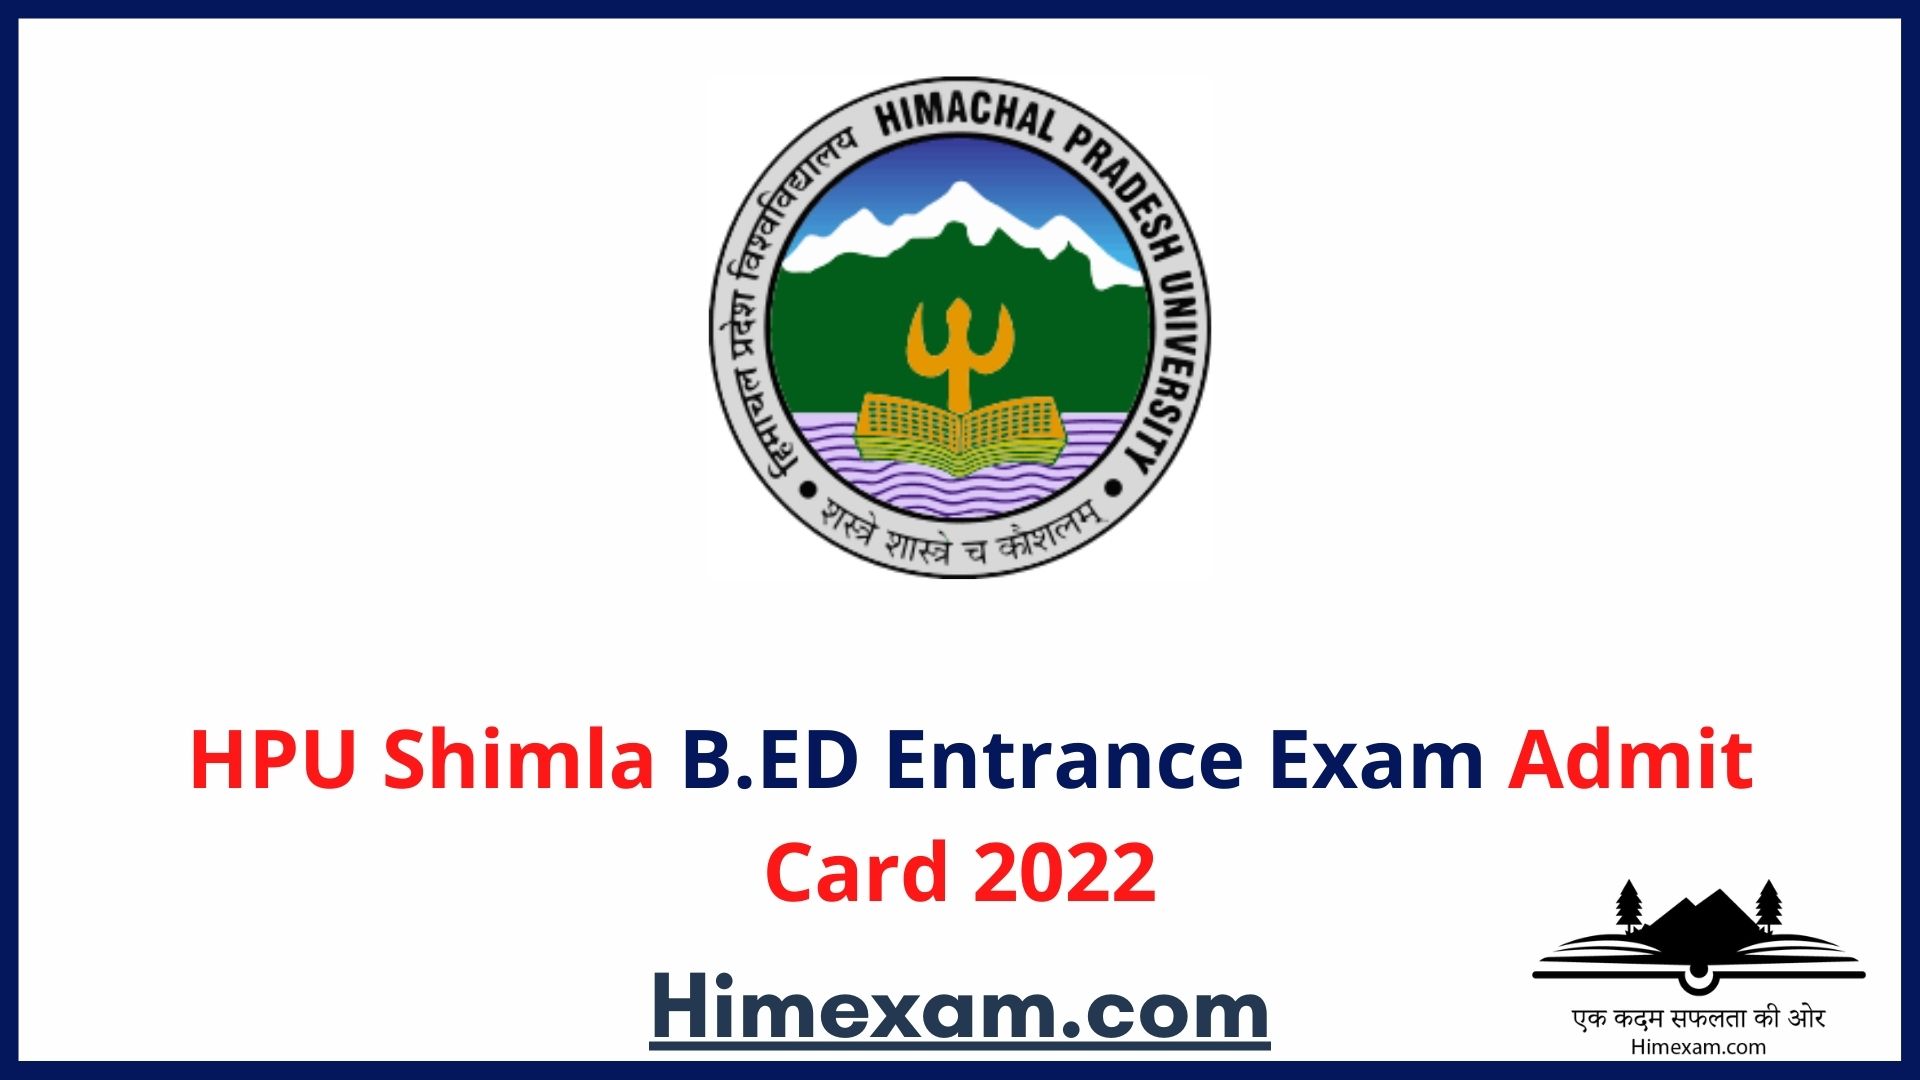 HPU Shimla B.ED Entrance Exam Admit Card 2022